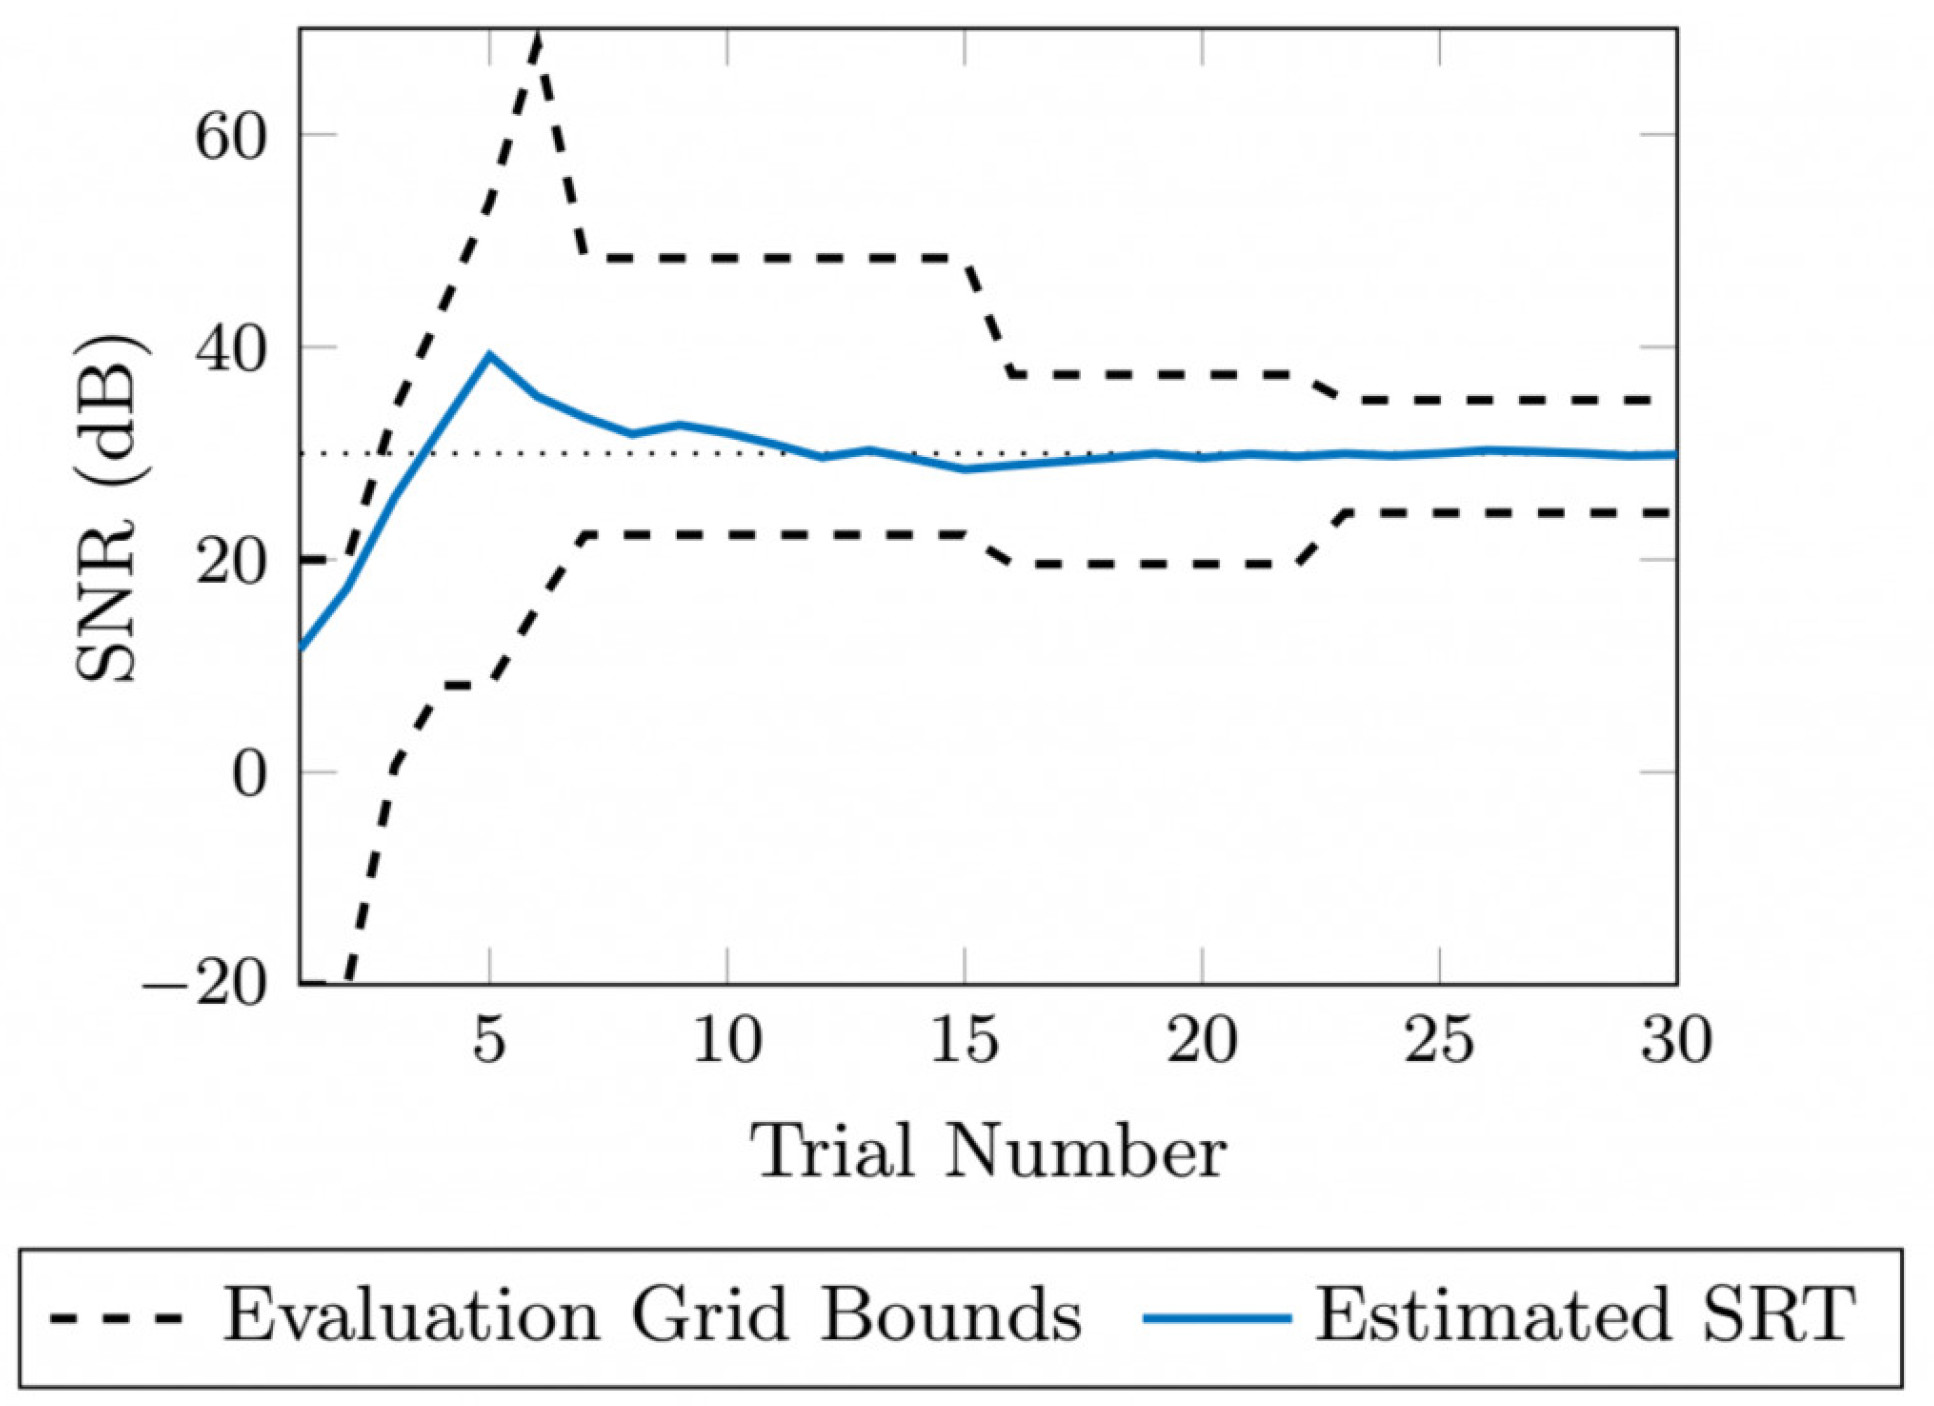 Evaluation grid